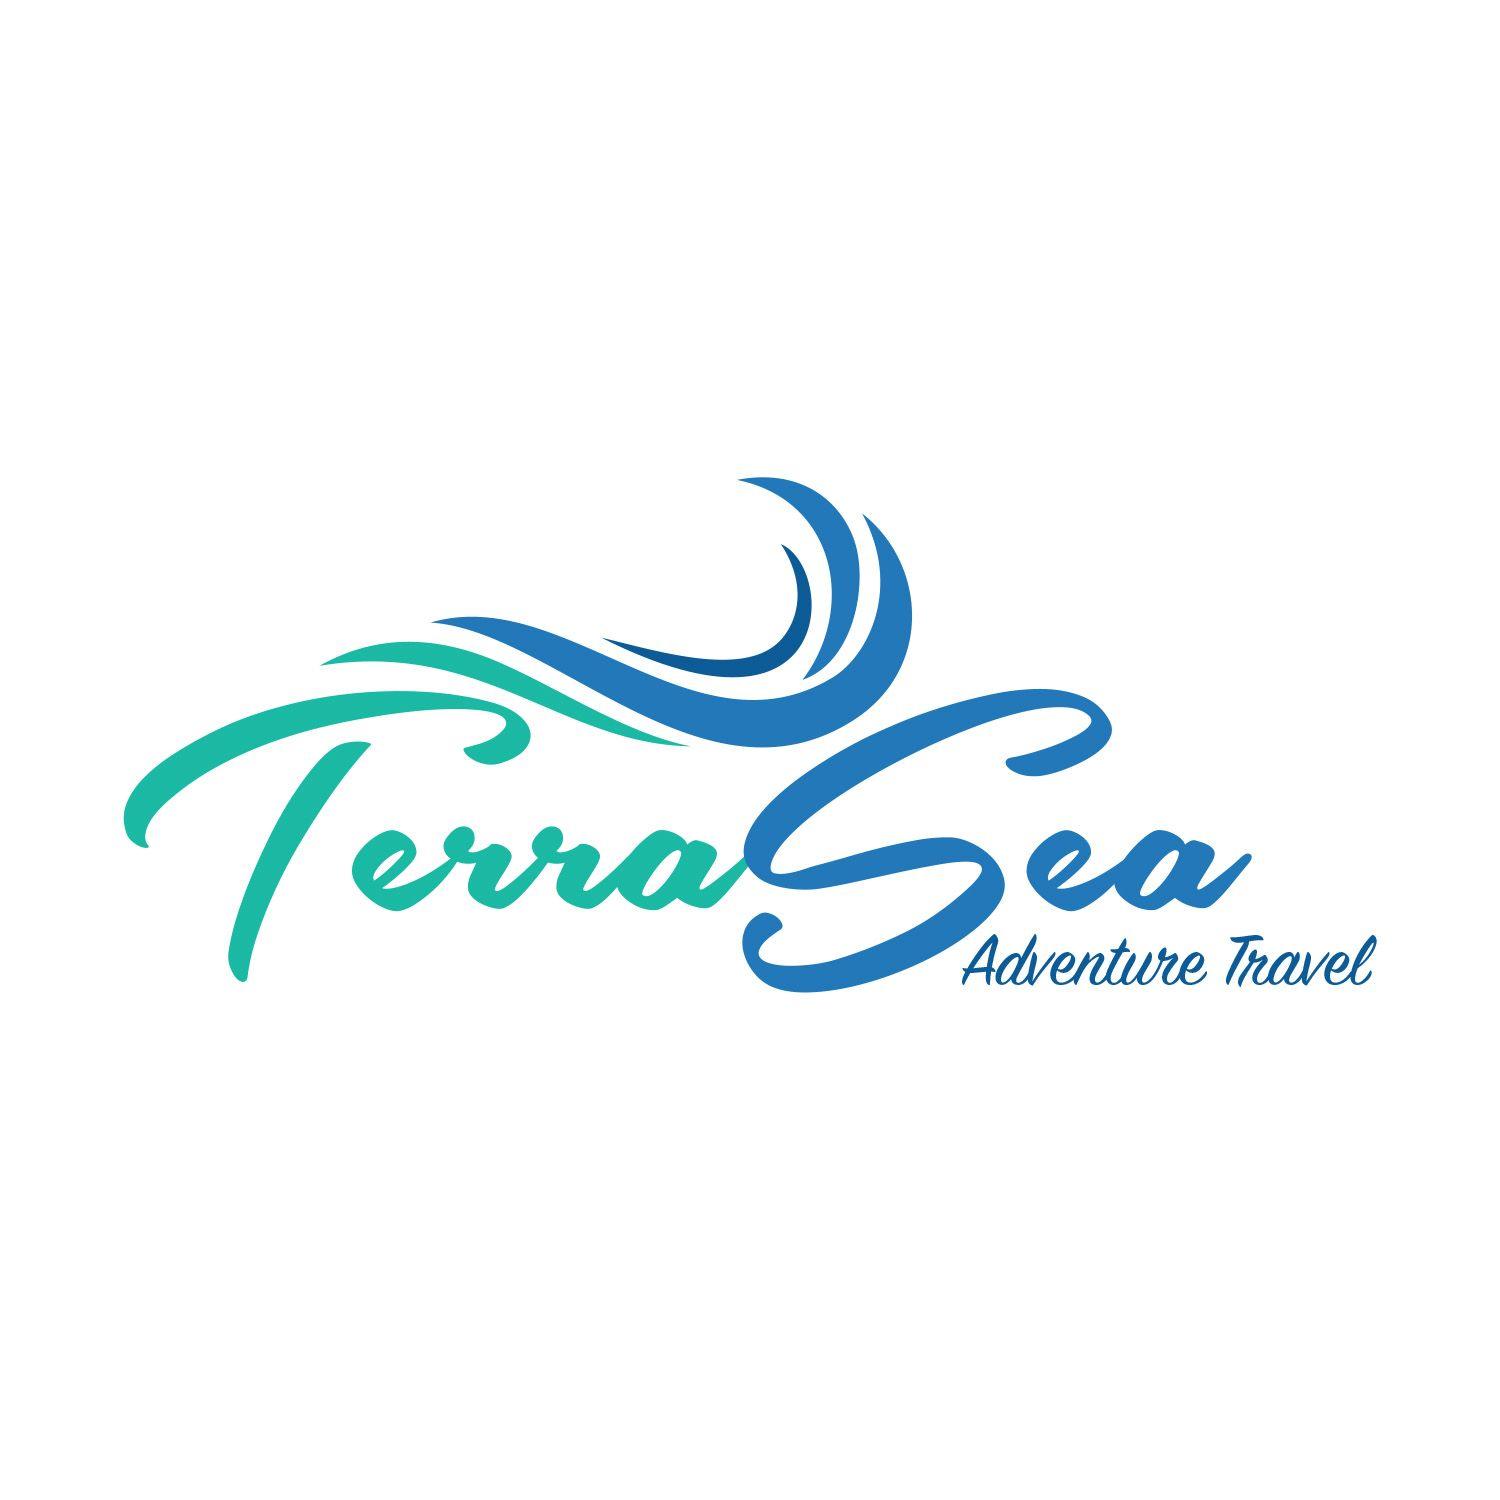 Janssen Logo - Bold, Playful, Travel Agent Logo Design for TerraSea Adventure ...